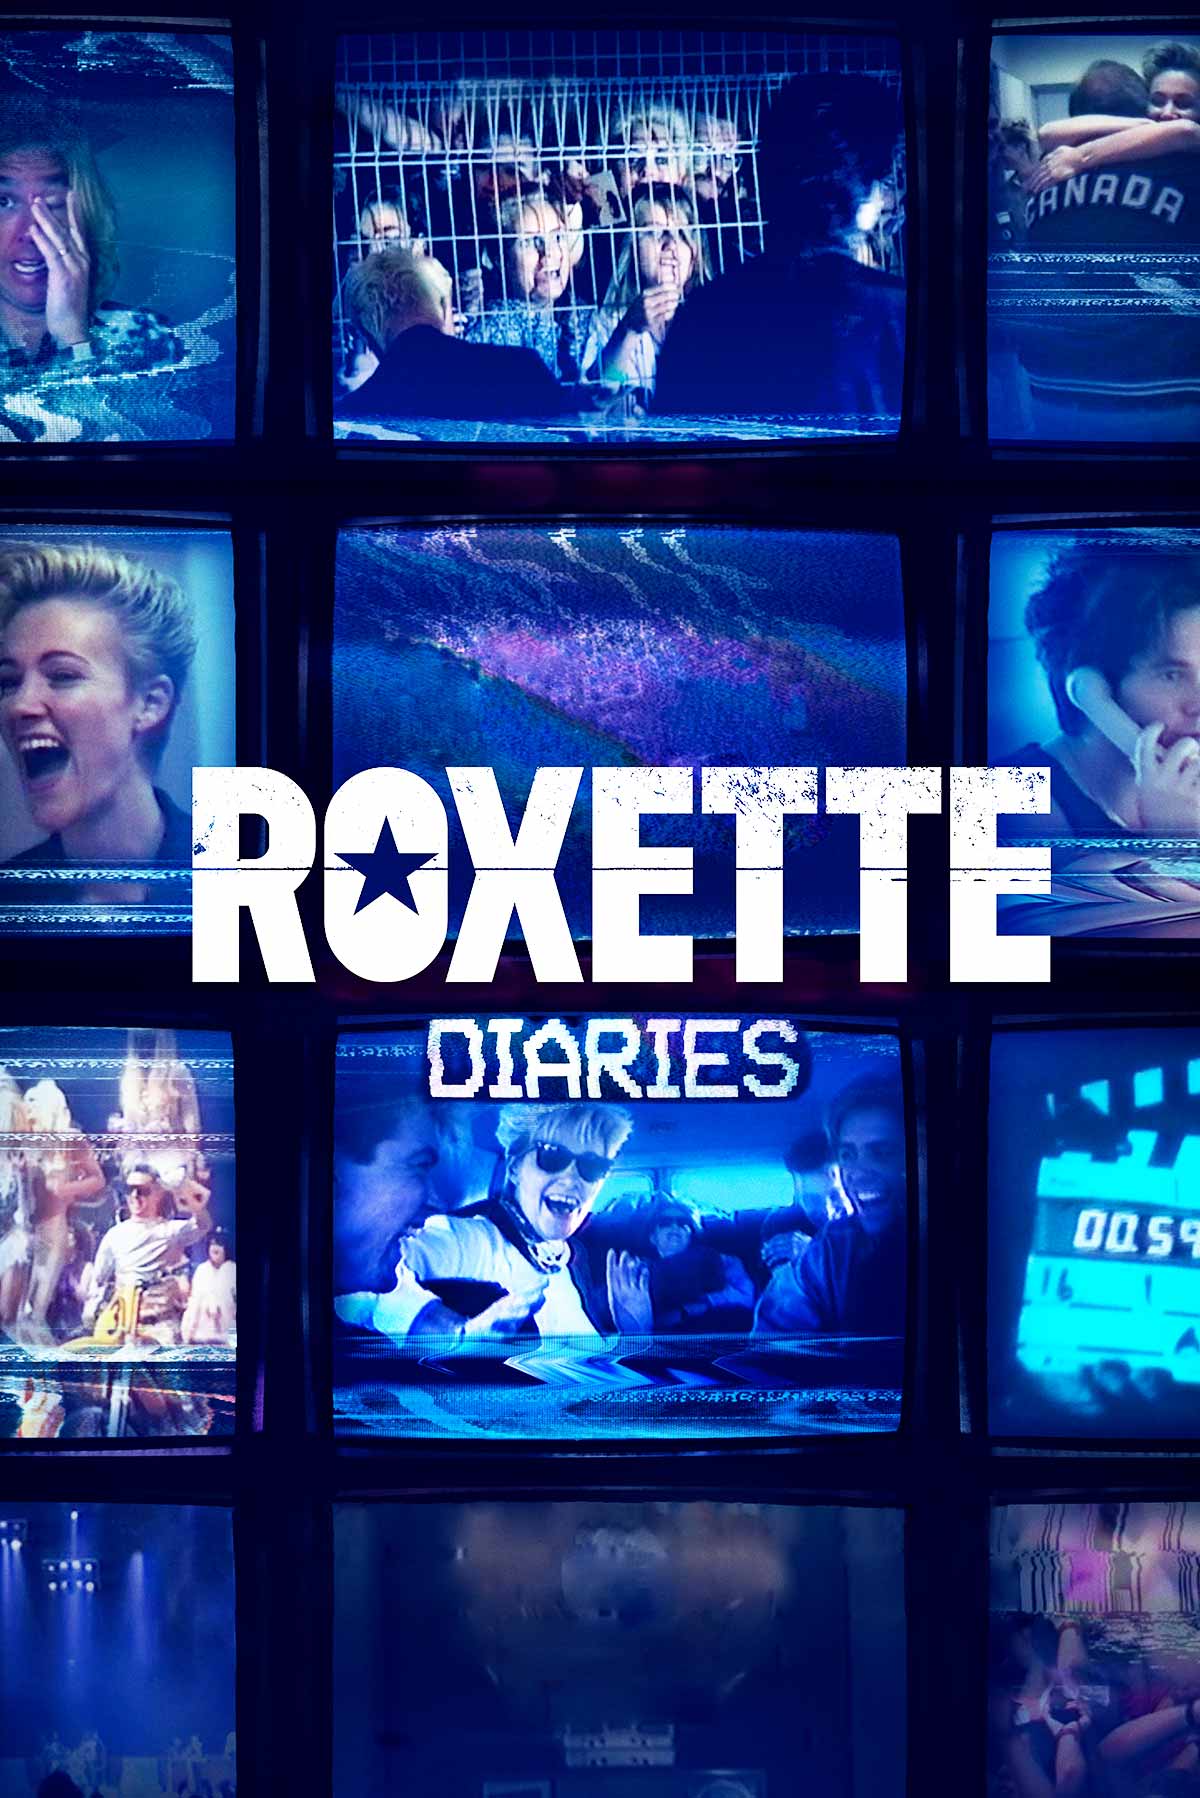 Roxette Diaries